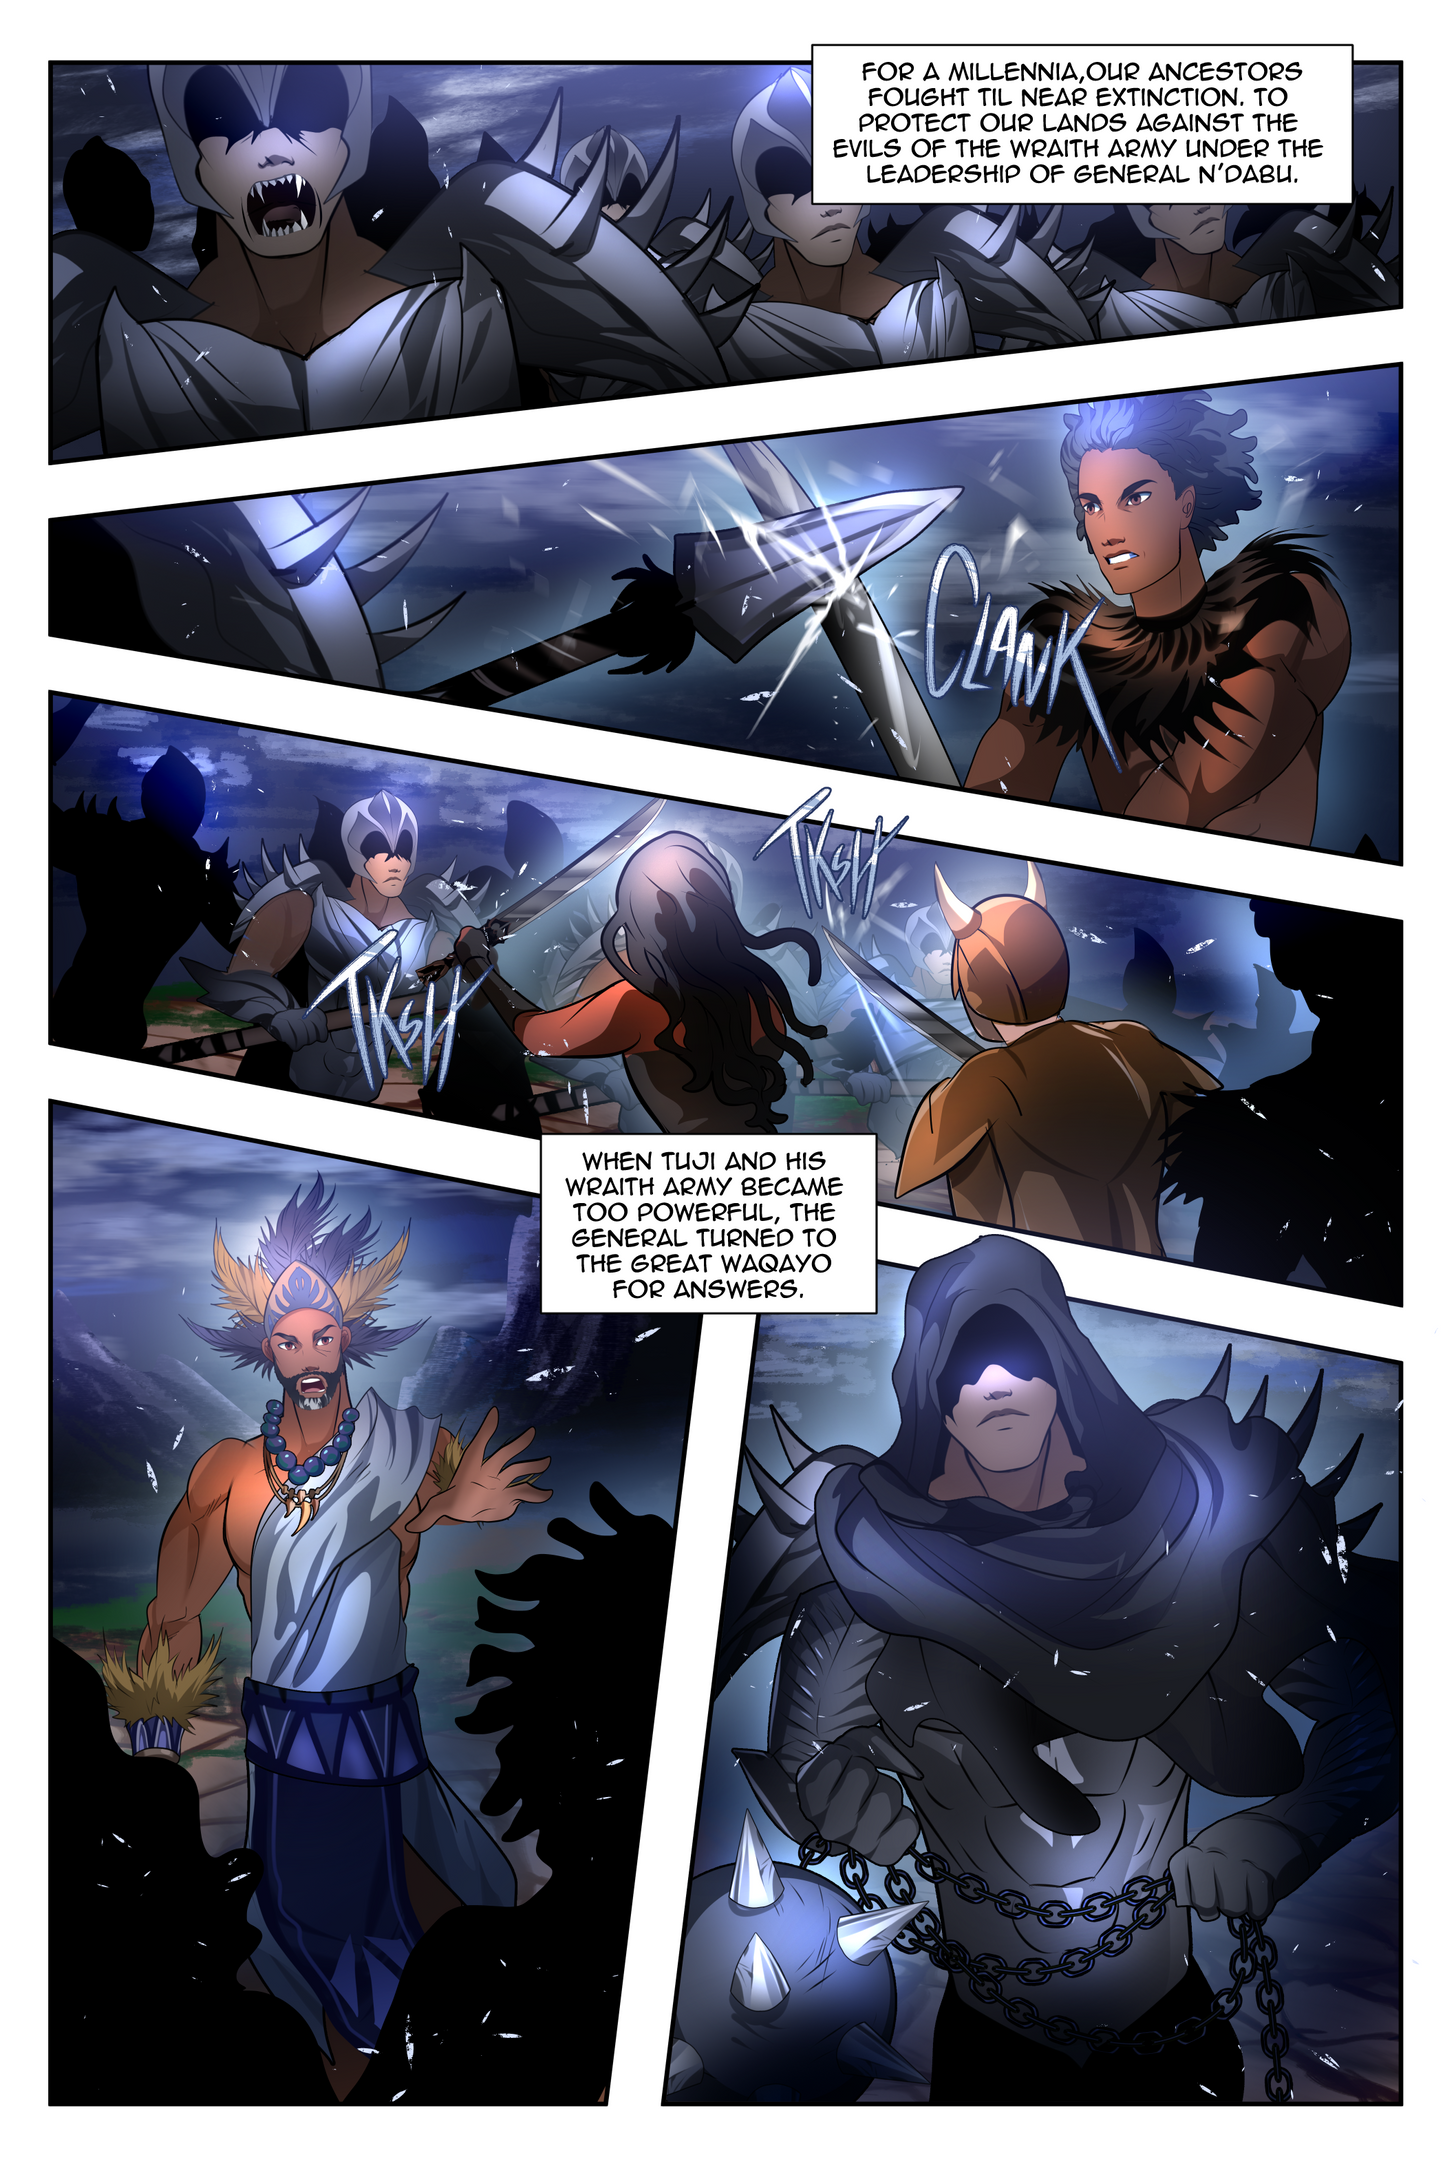 The Maji: Kings Origin | Graphic Novel | Soft Cover